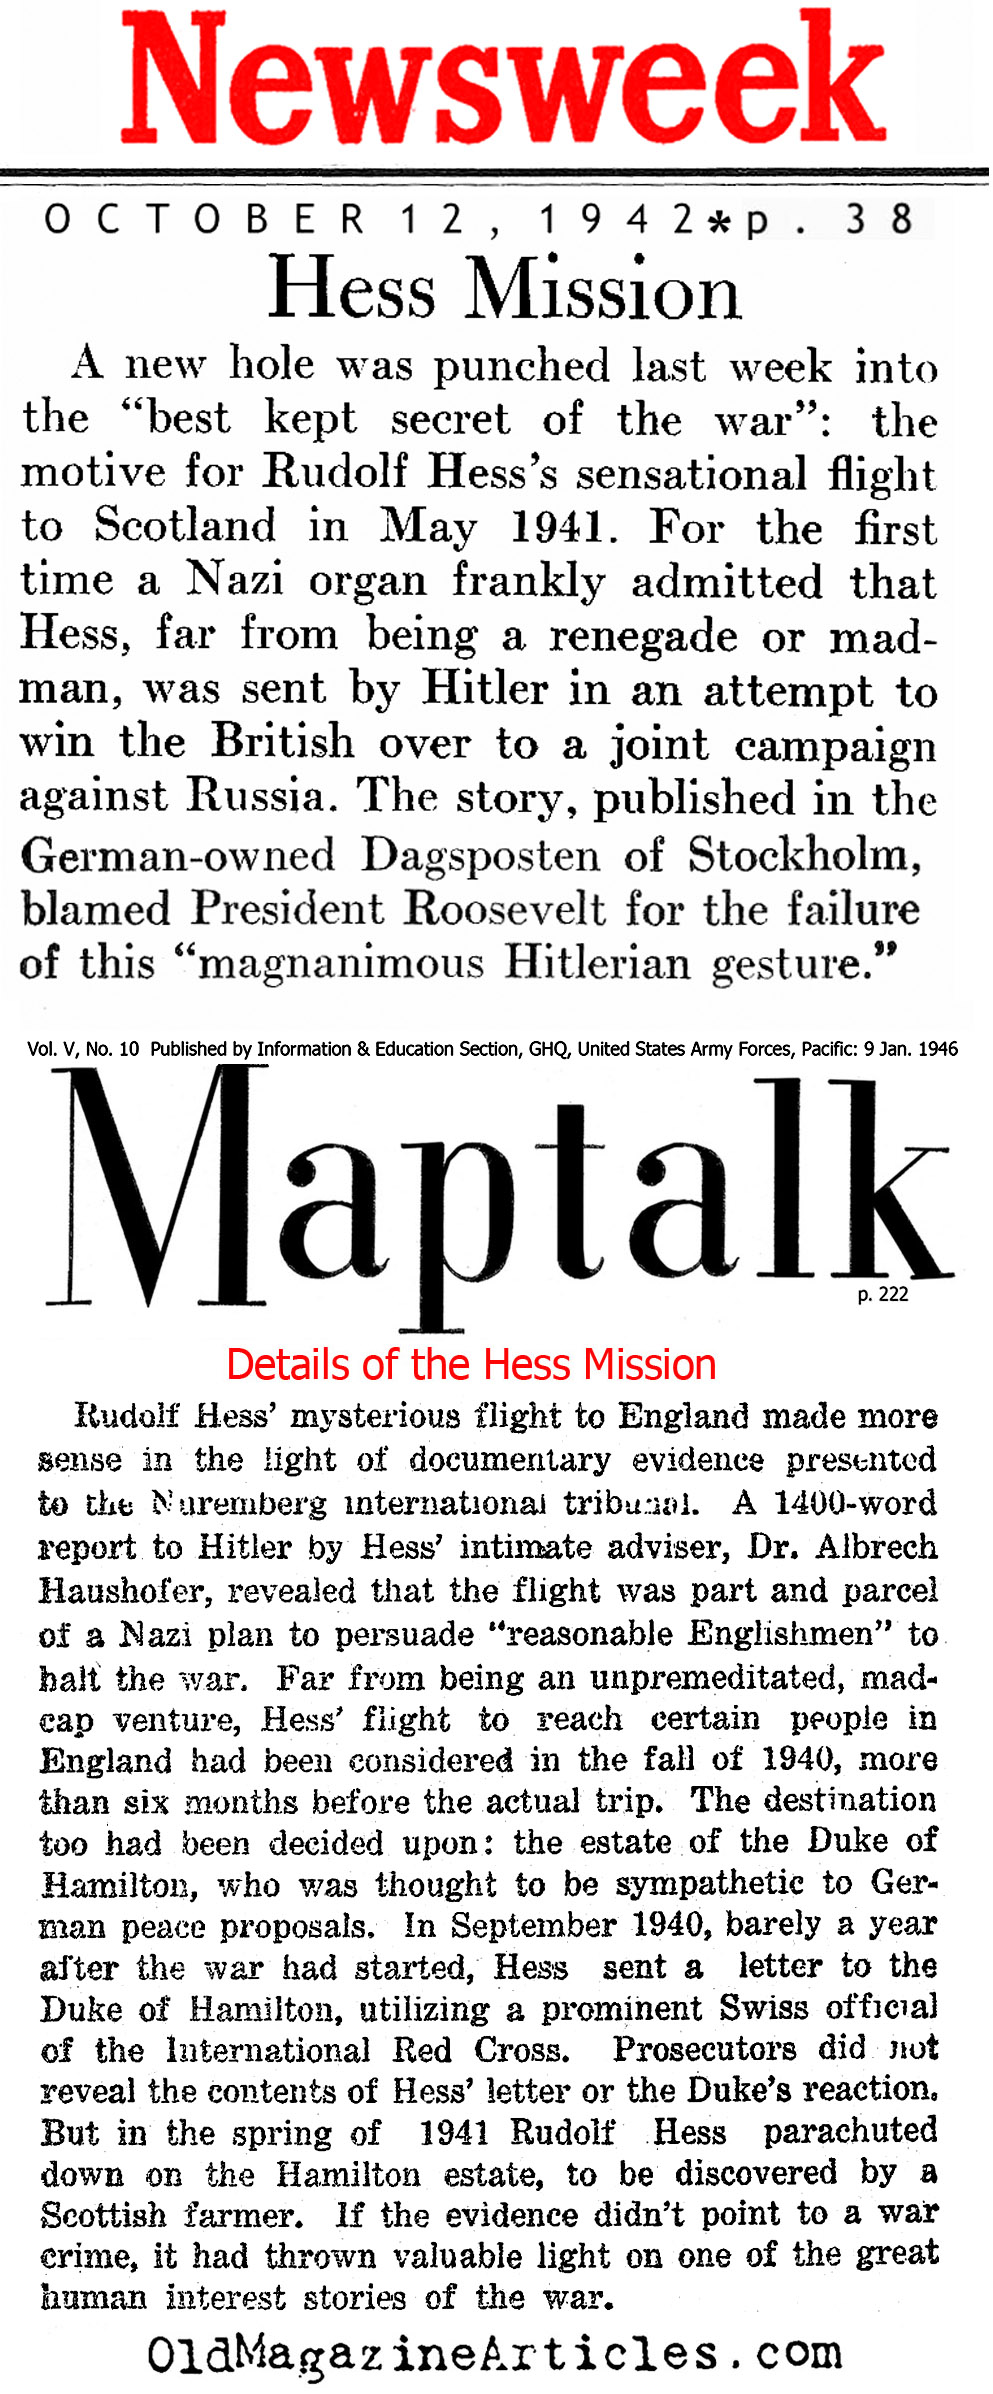 The Flight of Rudolf Hess (Newsweek, 1942 & Maptalk, 1946)